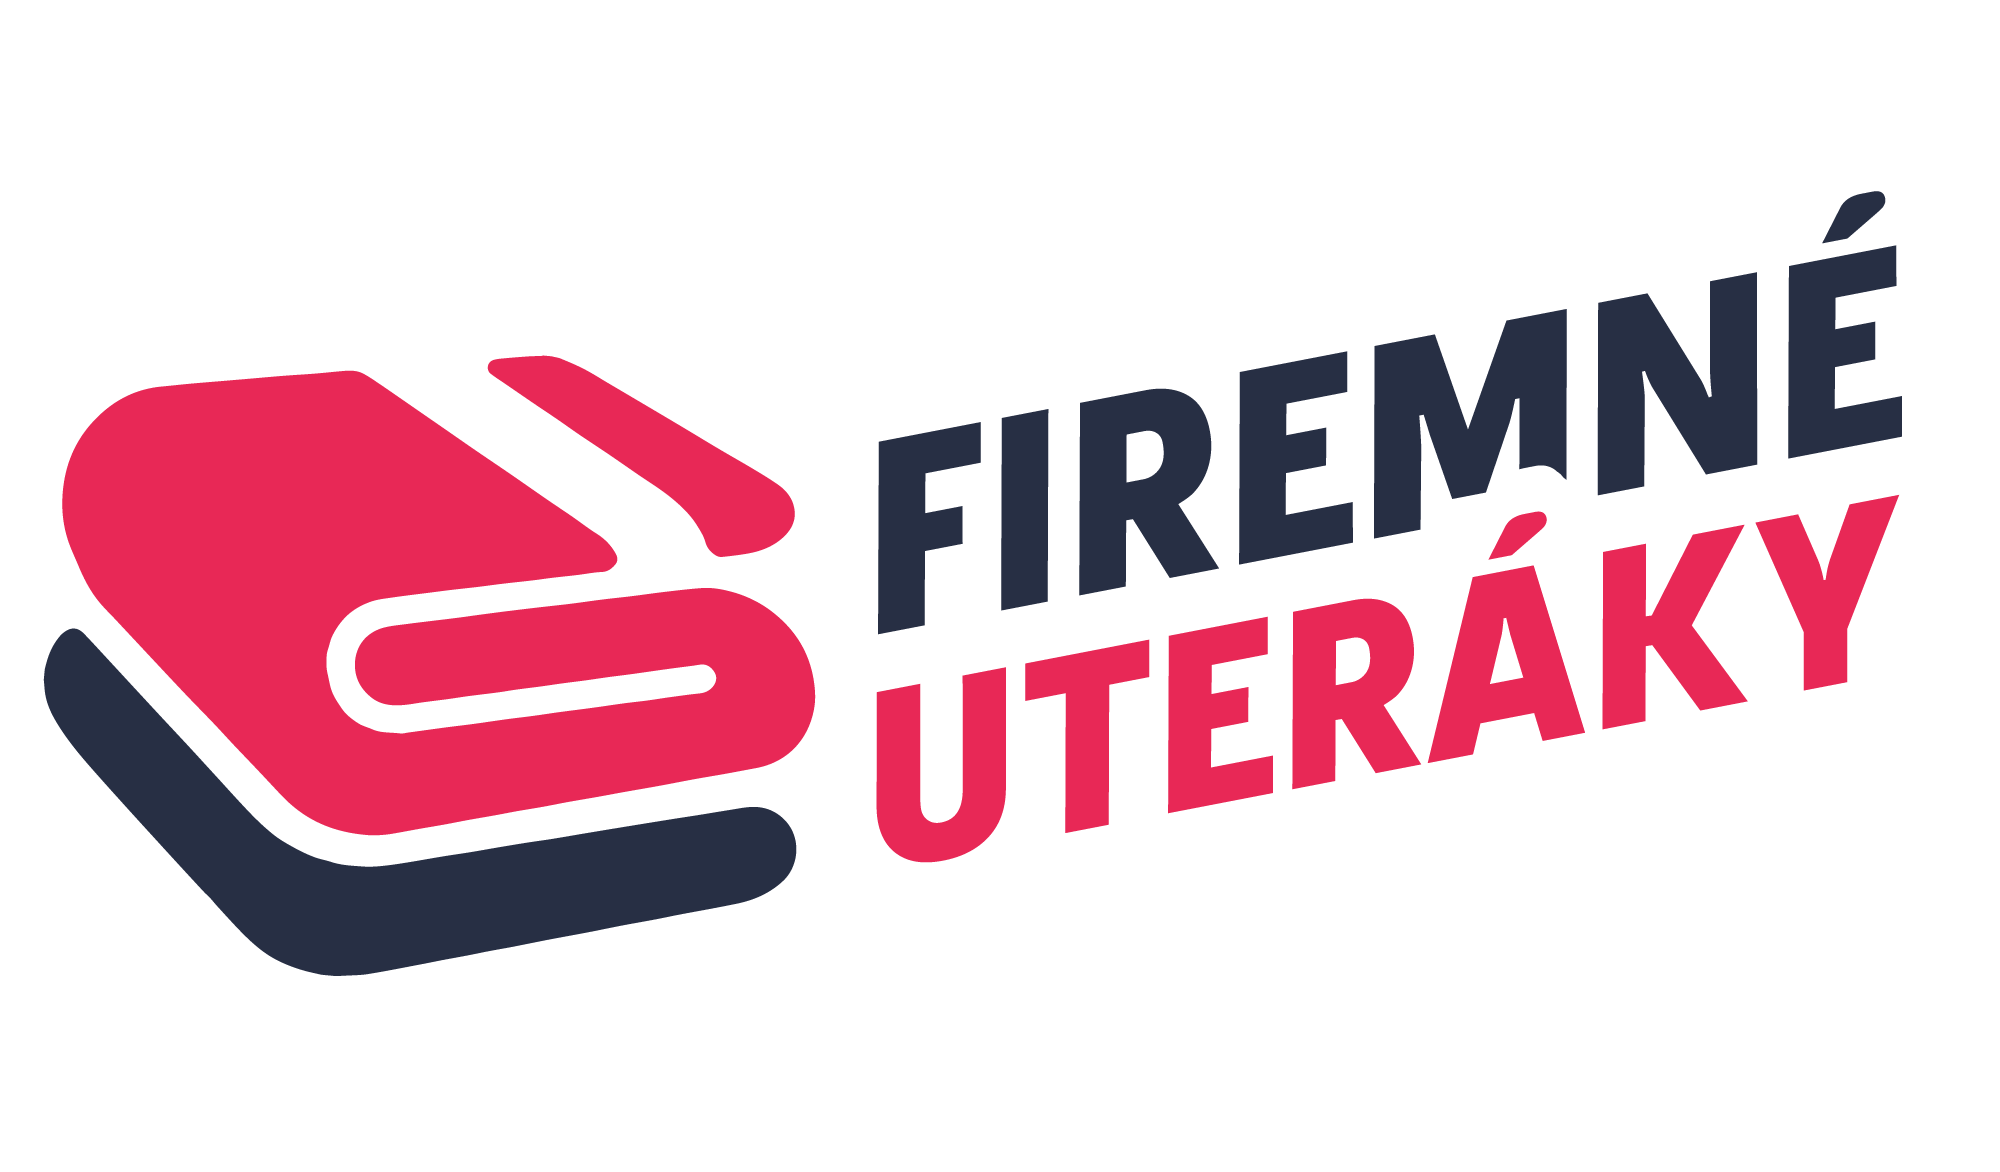 cropped firemne uteraky logo 1